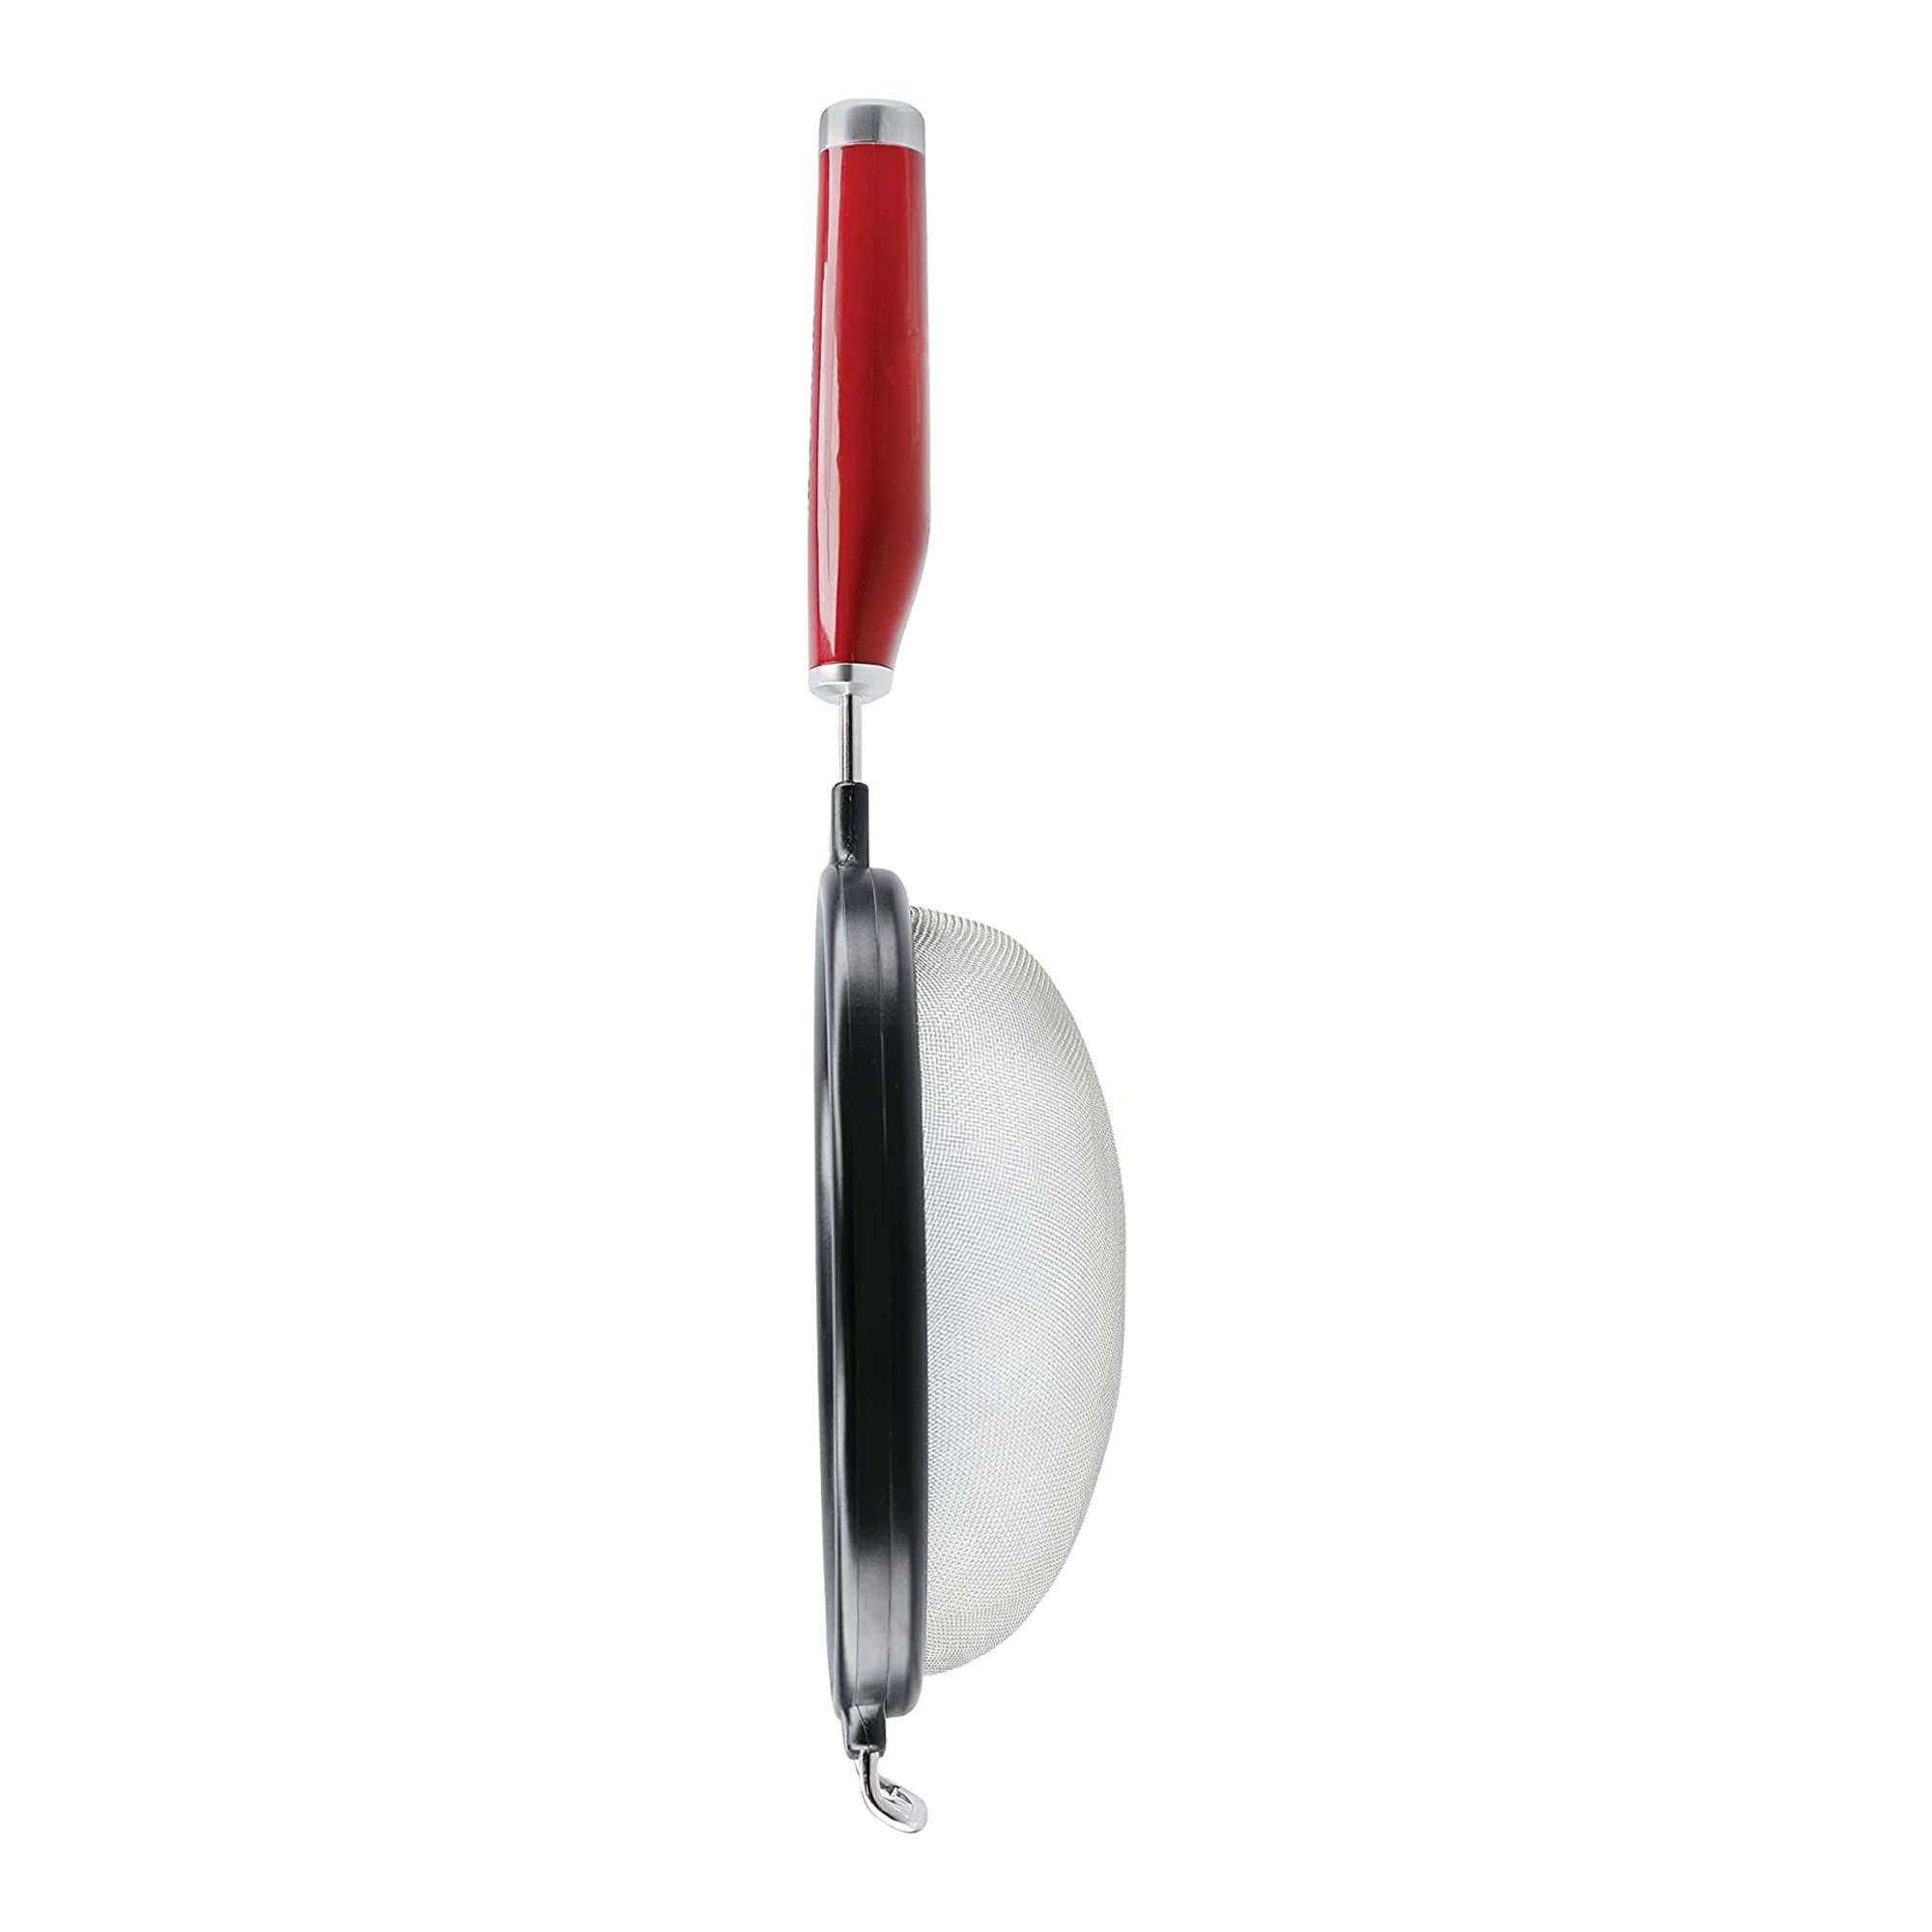 Fish turner, stainless steel, 31.5 cm, Empire Red - KitchenAid brand